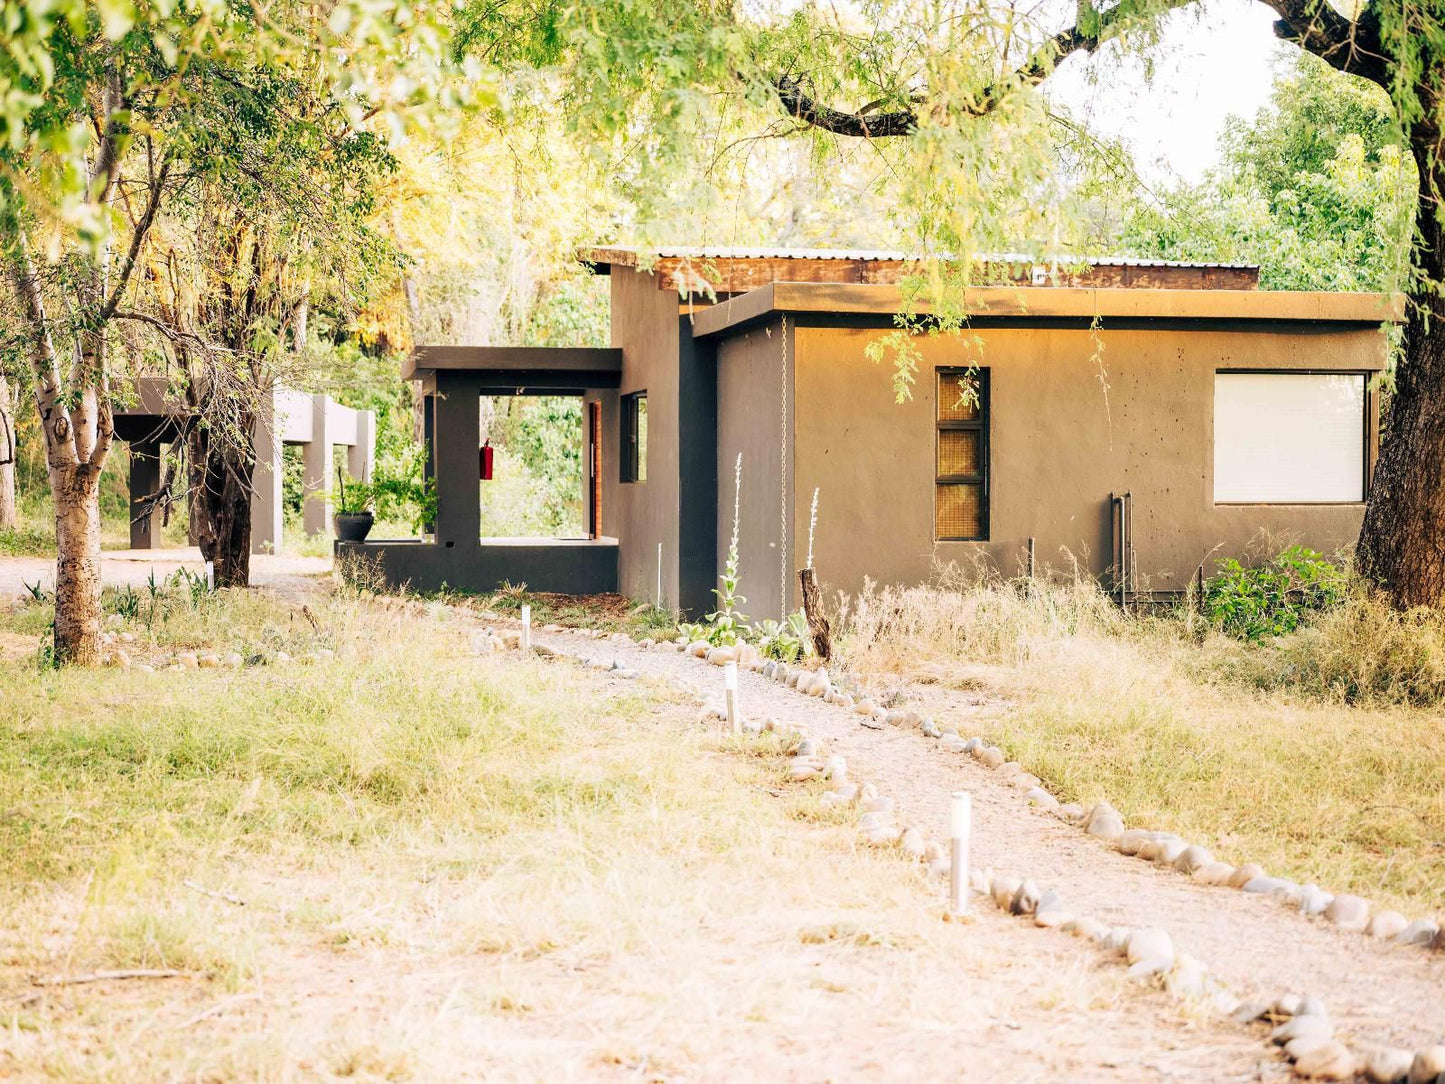 Bushriver Lodge Hoedspruit Limpopo Province South Africa Cabin, Building, Architecture